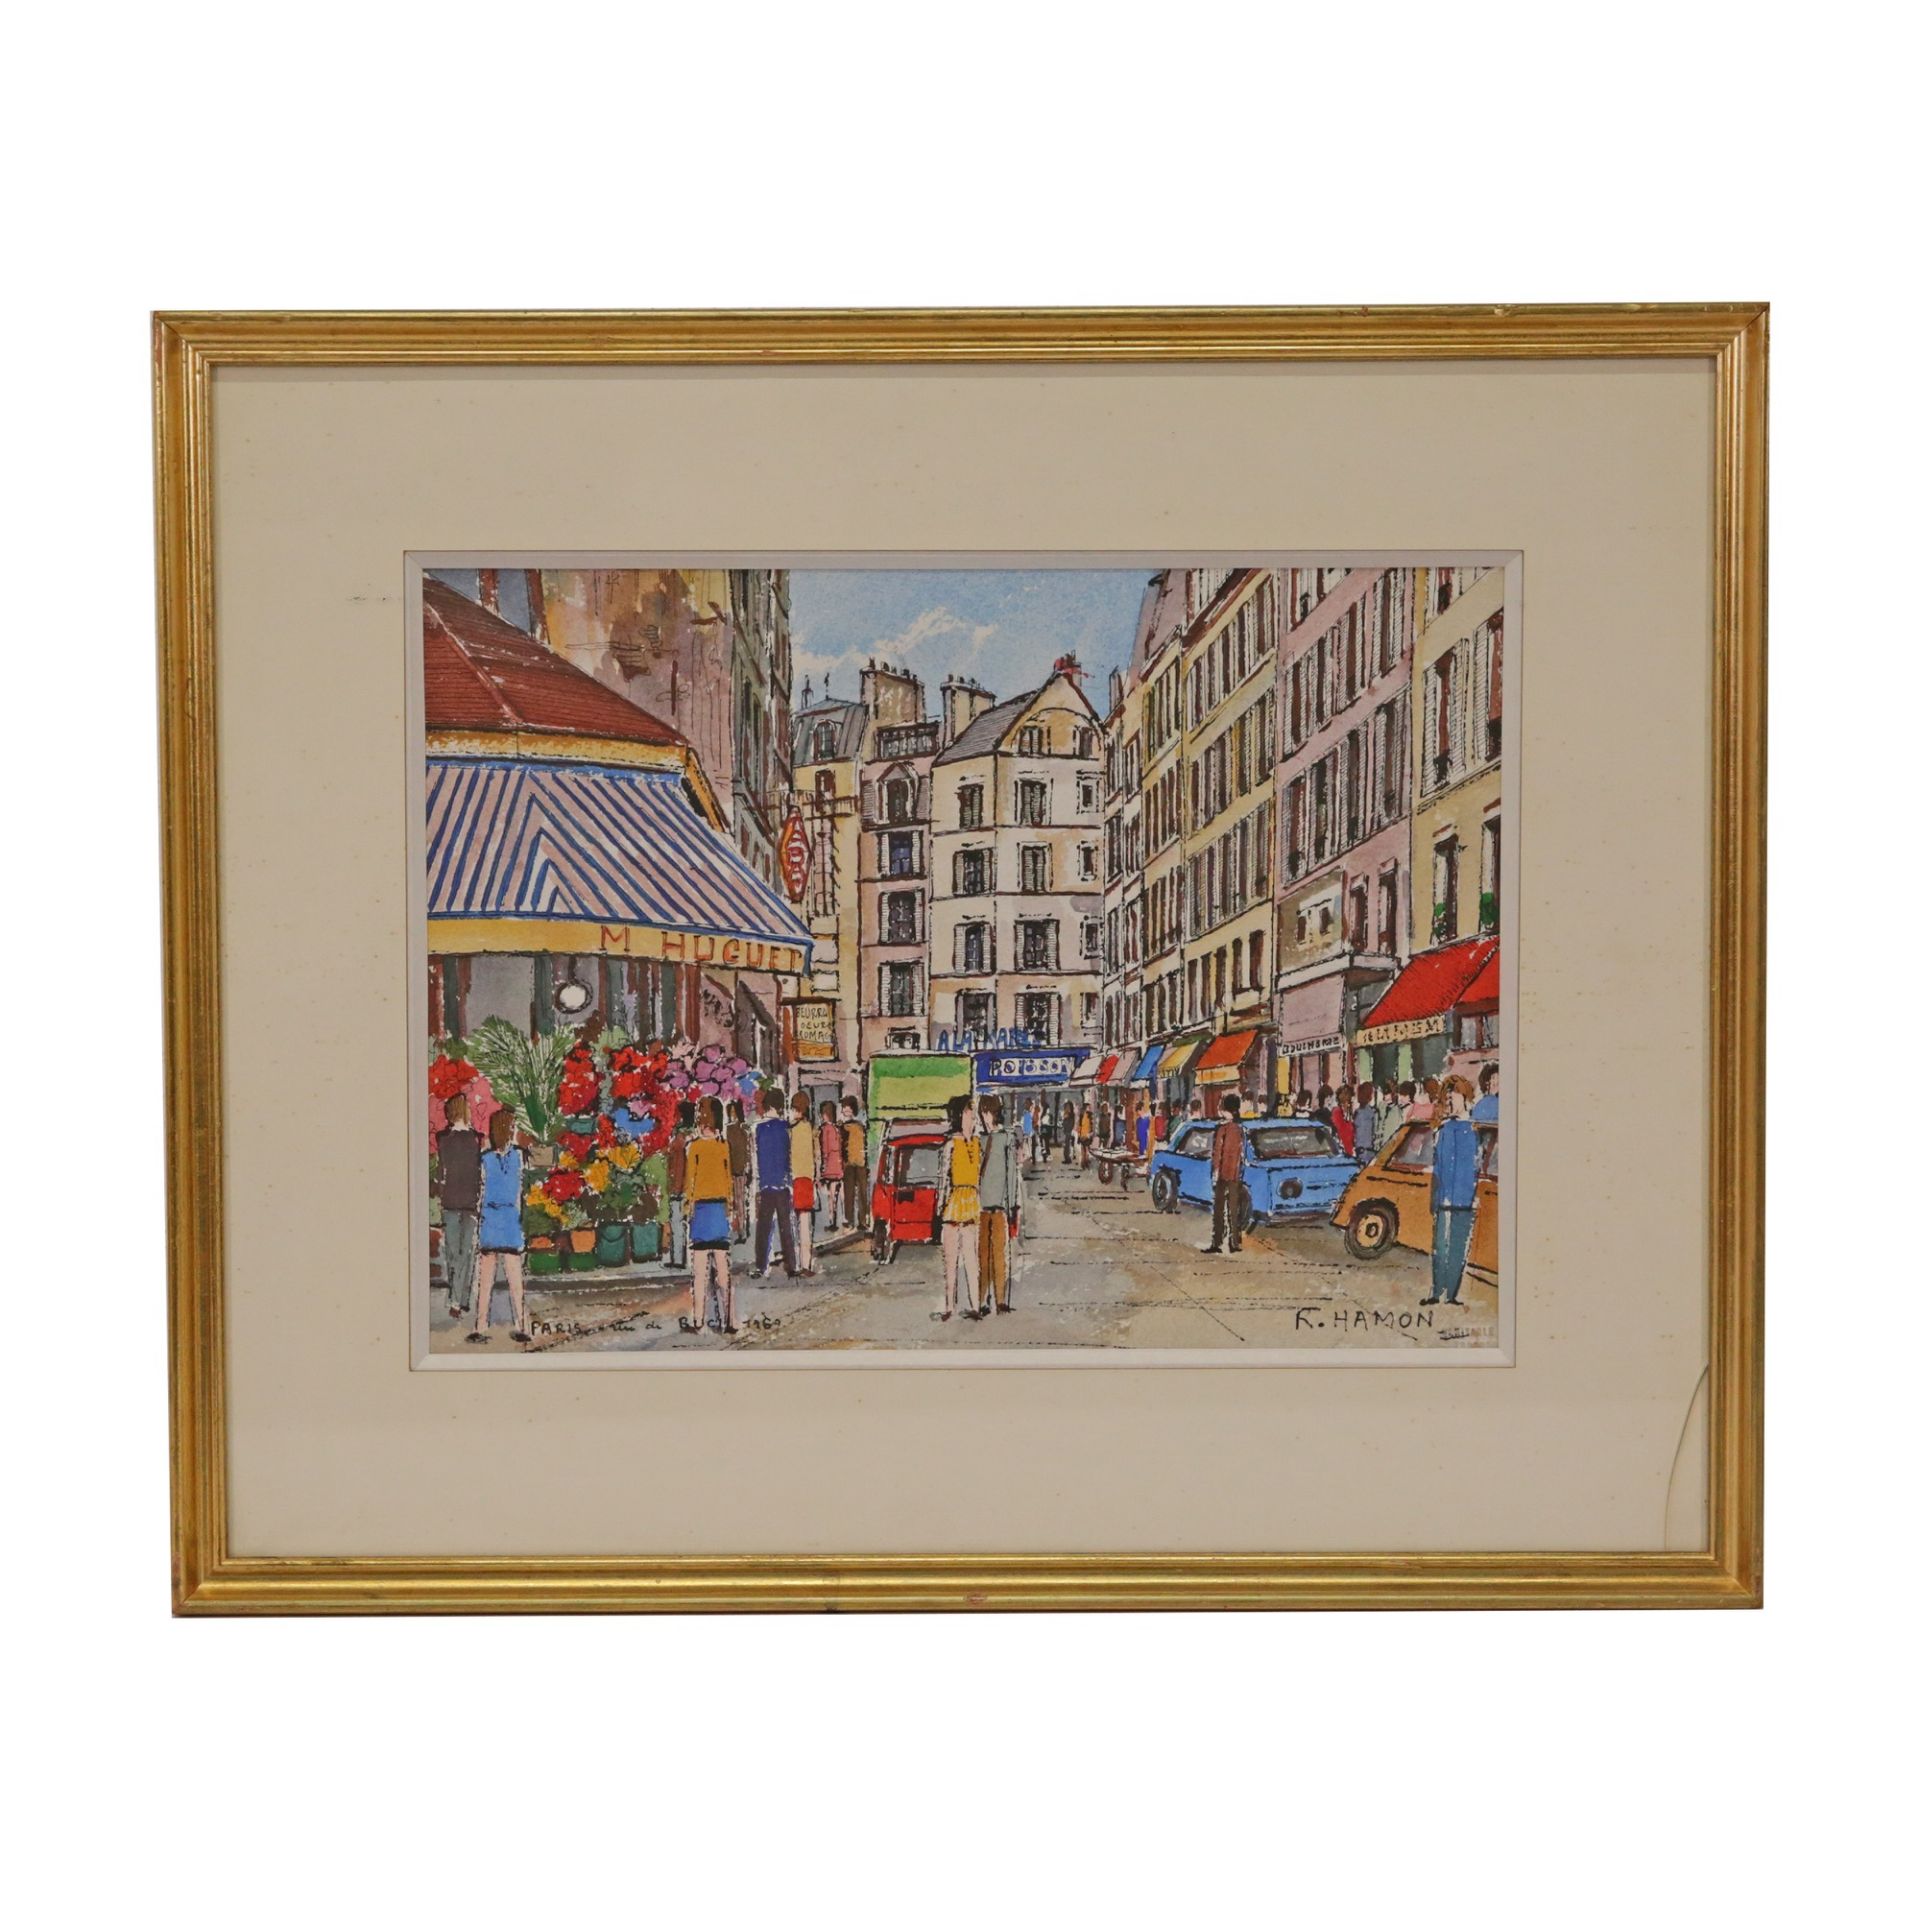 Roland Hamon (1909-1987) "Parisian street scenes", 1969, Watercolor on paper.